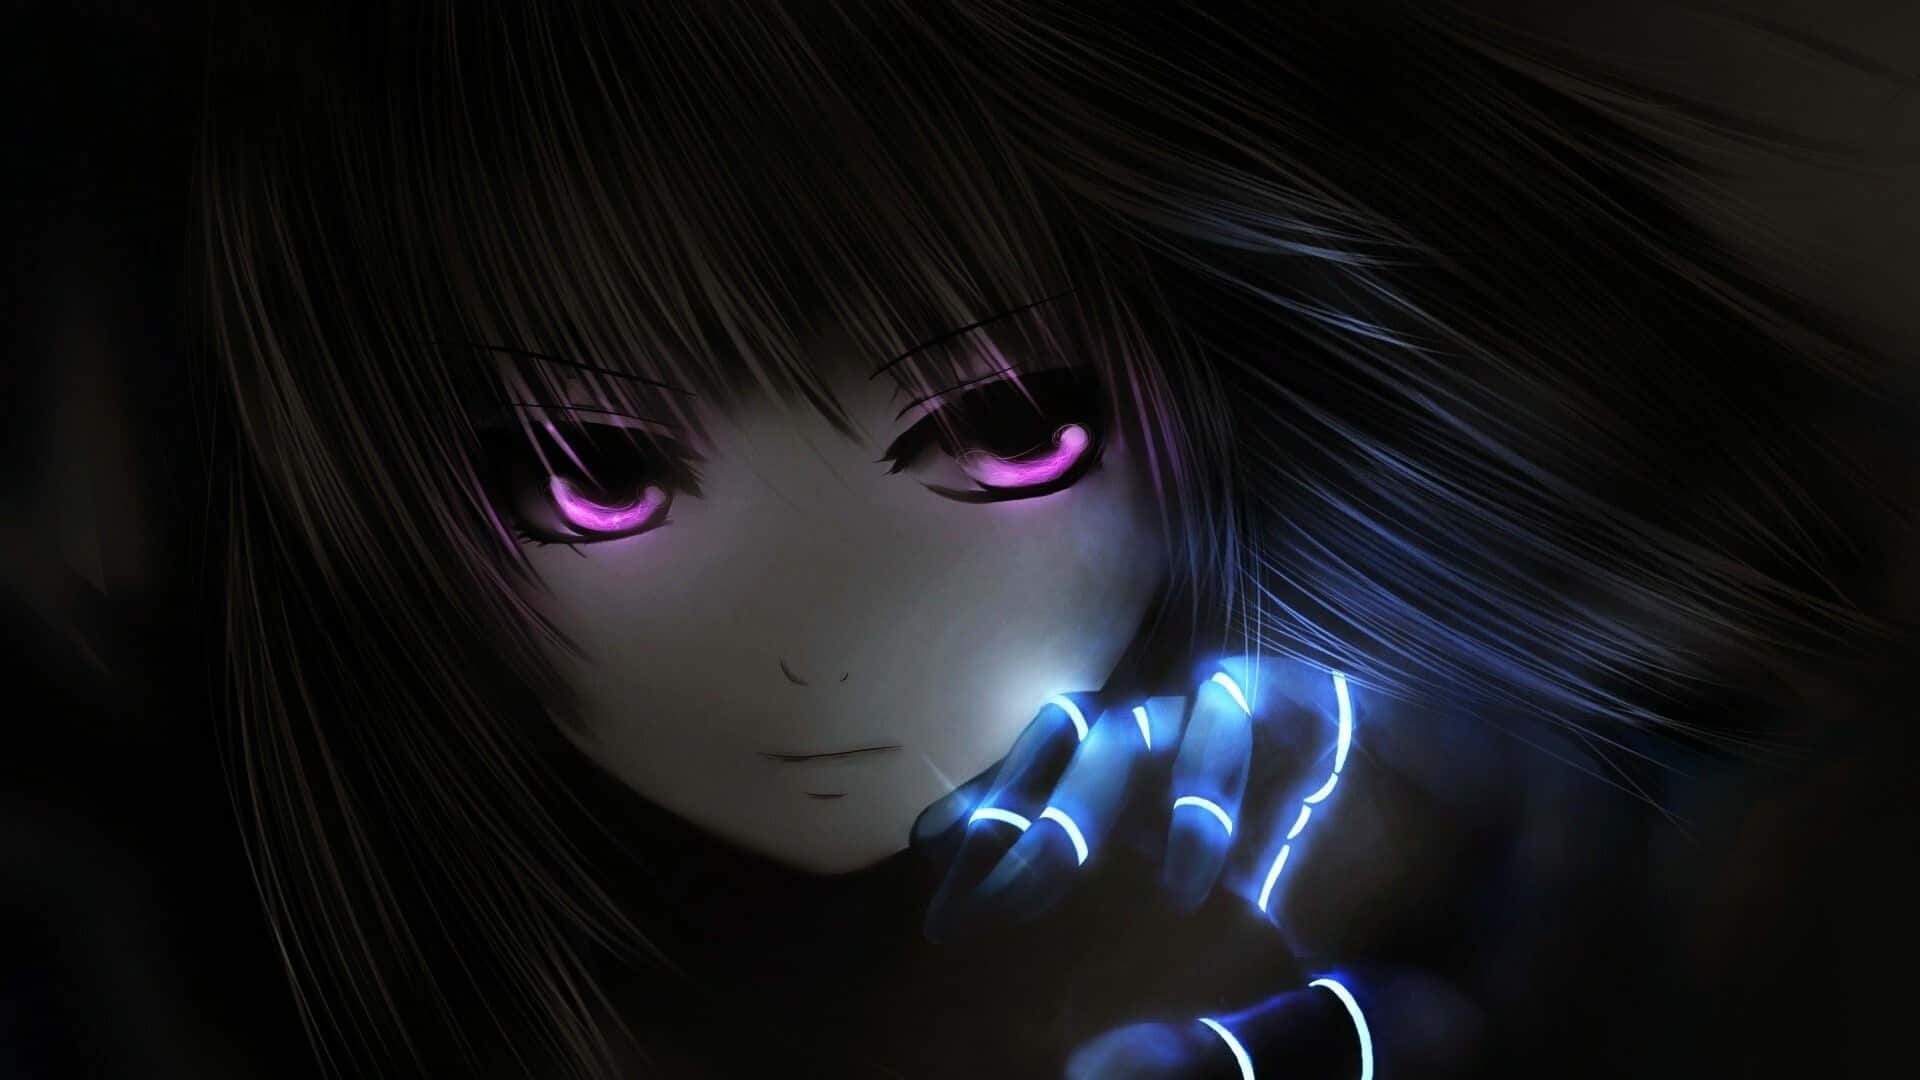 Black Anime Girl With Purple Eyes Aesthetic Pc Background